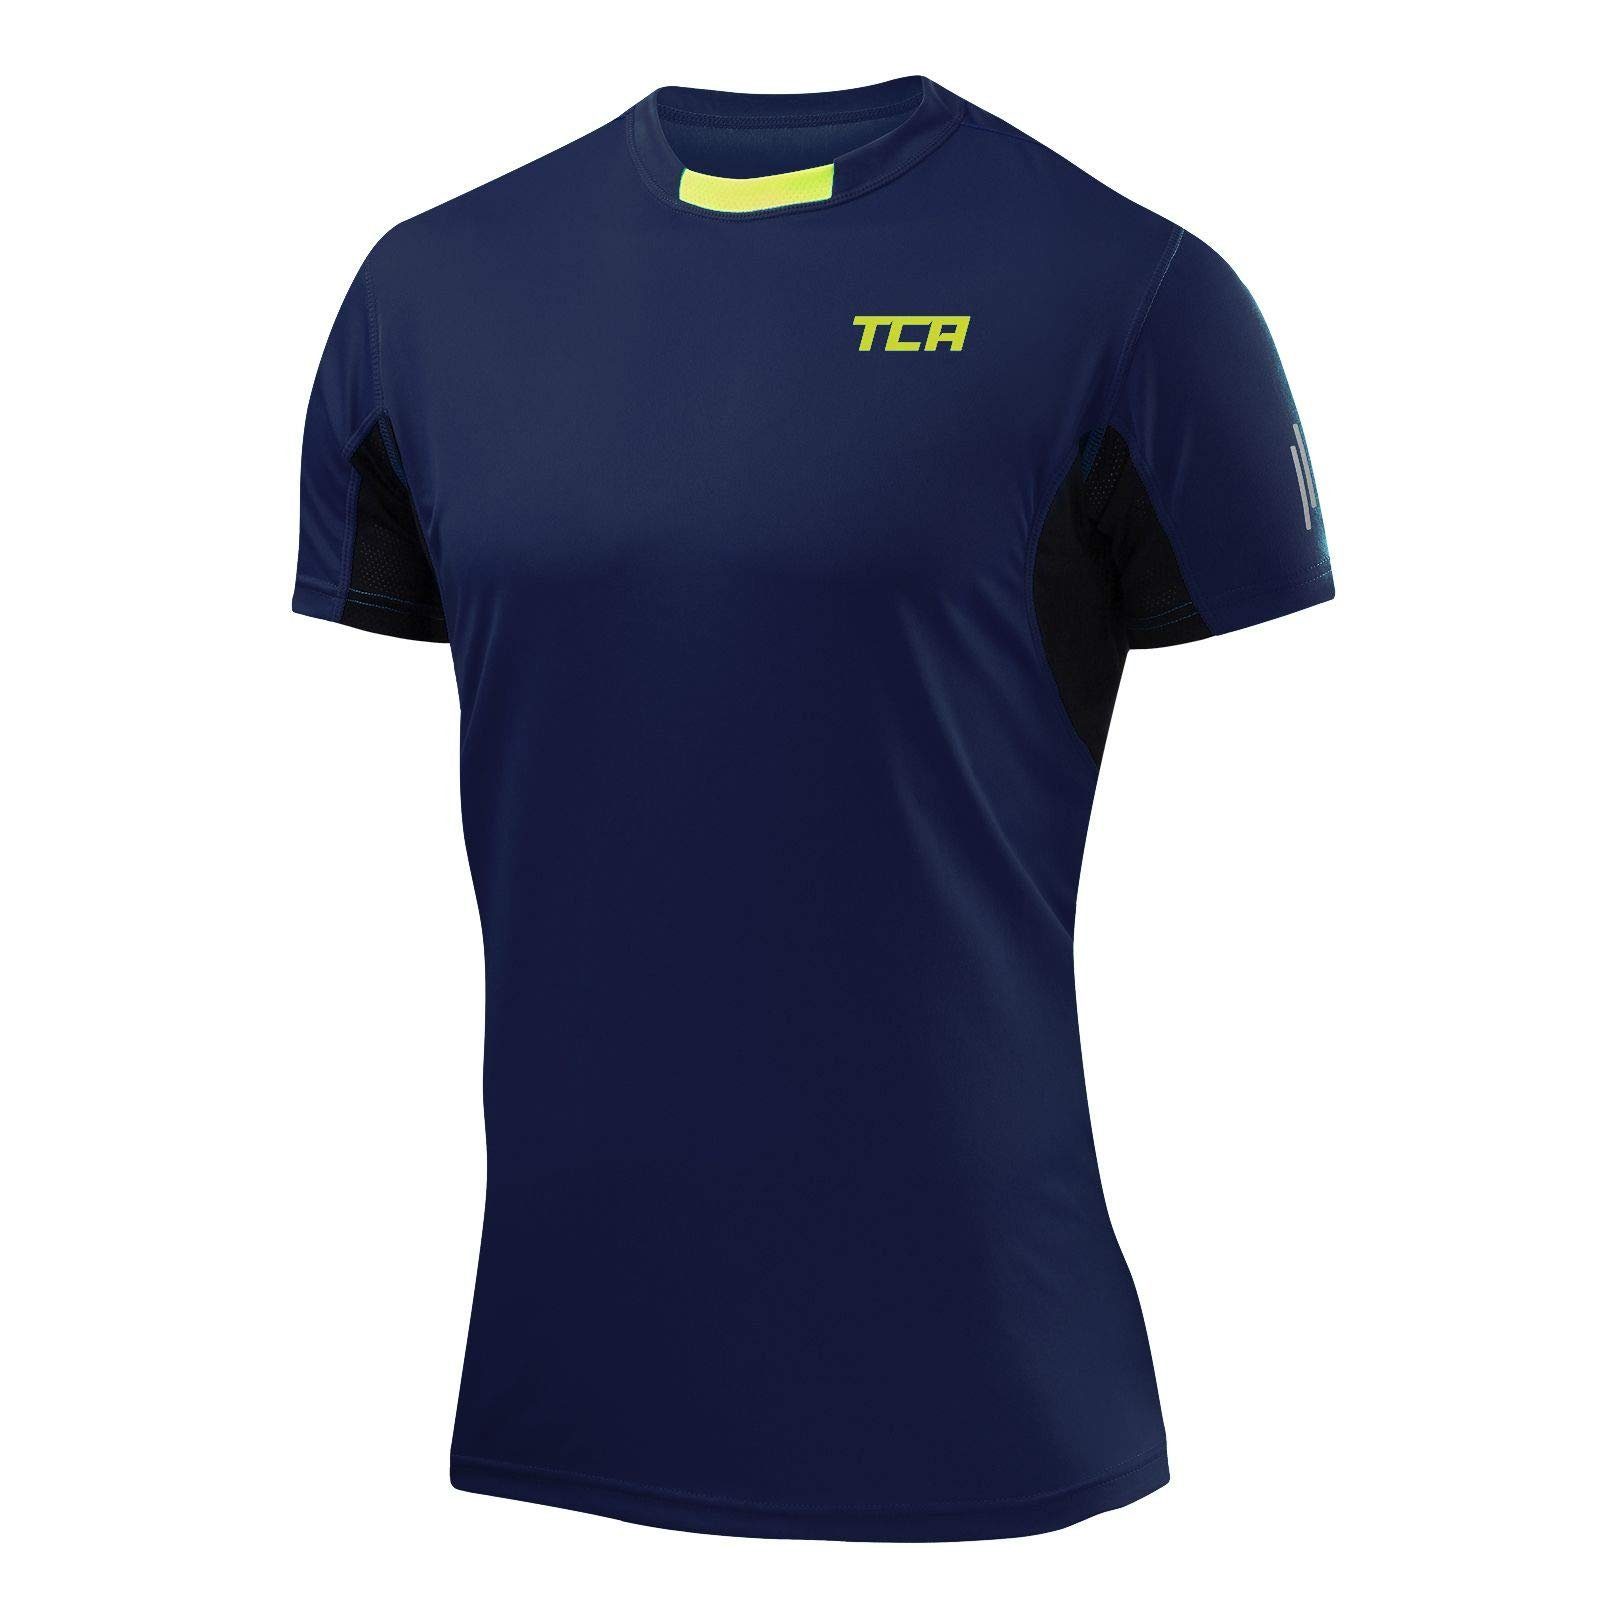 Atomic XXL T-Shirt TCA Herren - T-Shirt Dunkelblau, TCA